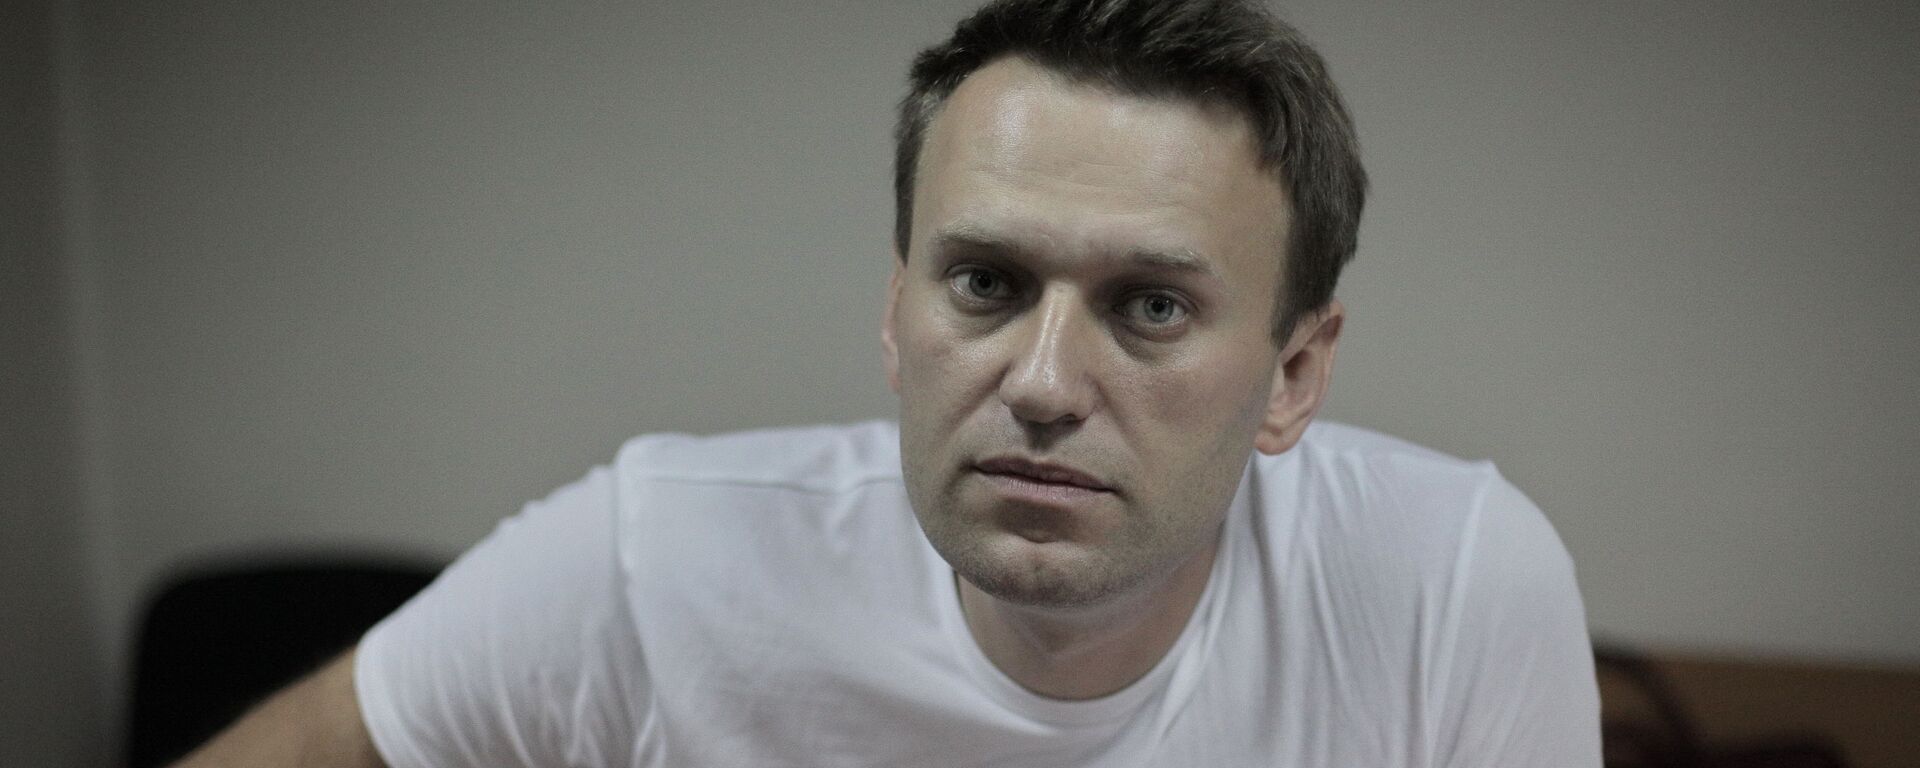 Alexéi Navalni, opositor ruso - Sputnik Mundo, 1920, 27.01.2021